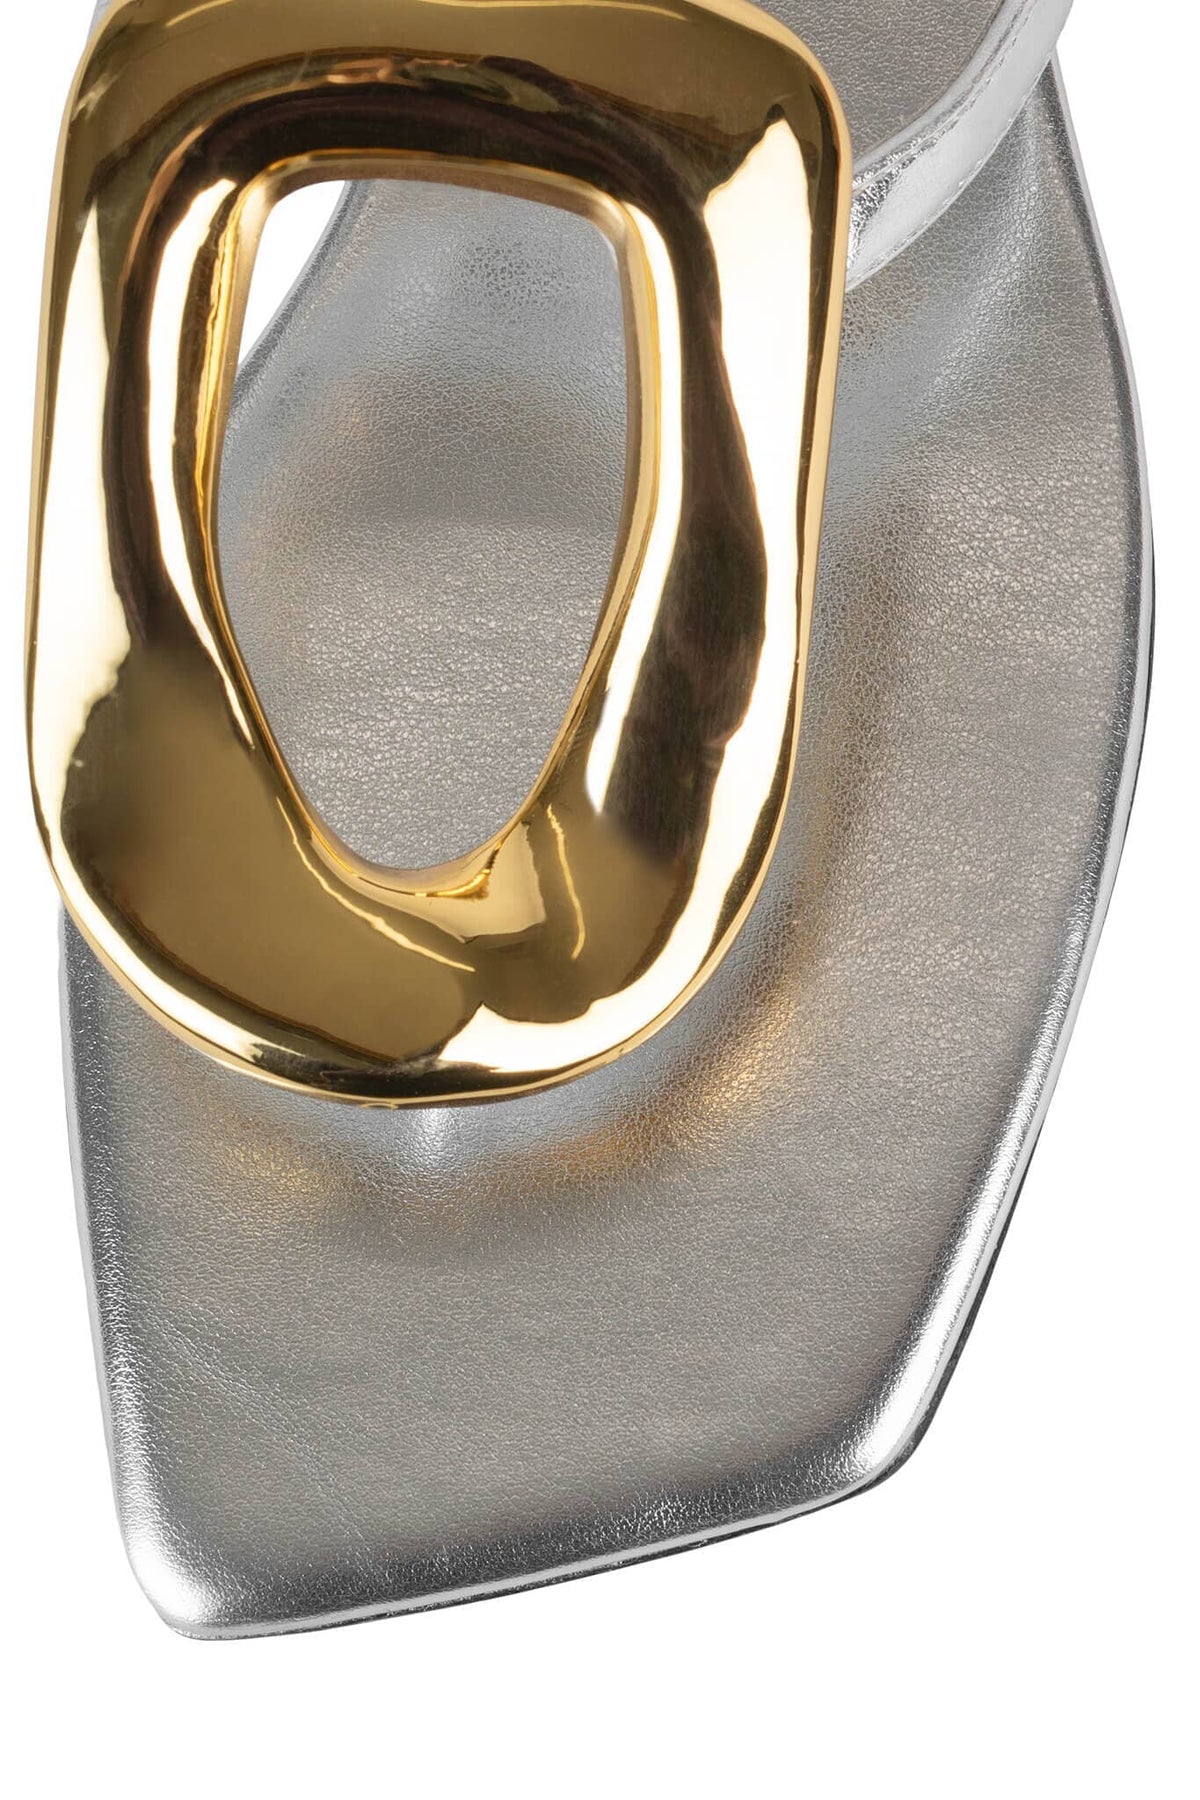 LINQUES-2 Jeffrey Campbell Flat Sandals Silver Gold